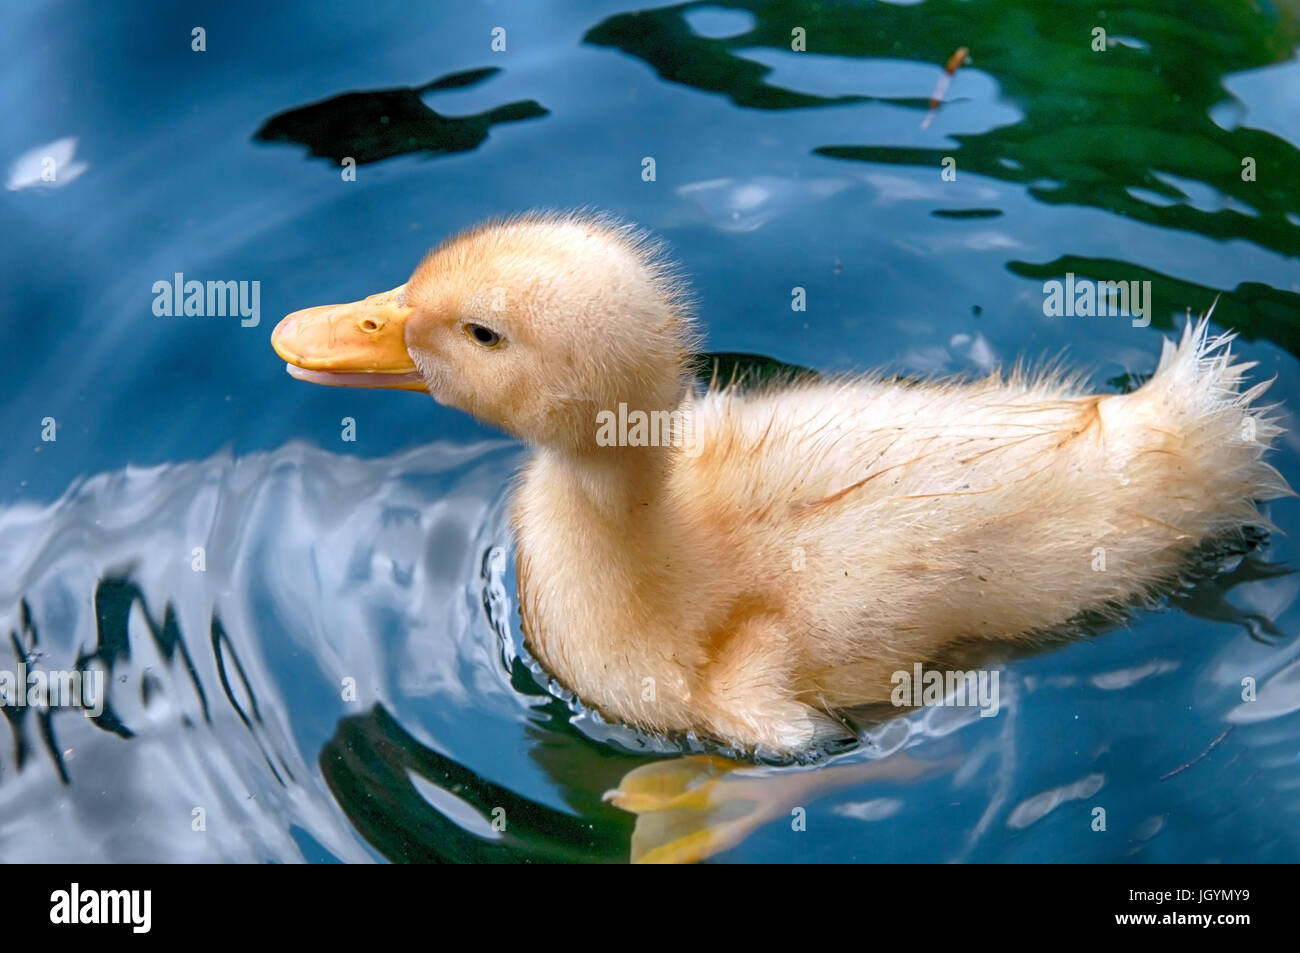 white duck swimming in water Stock Photo